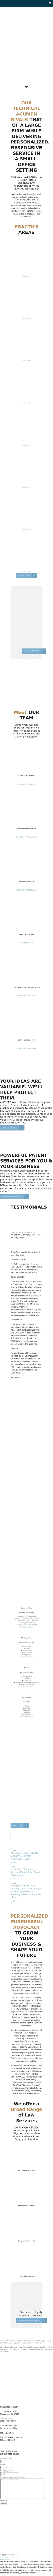 CoffyLaw LLC - Elkins Park PA Lawyers